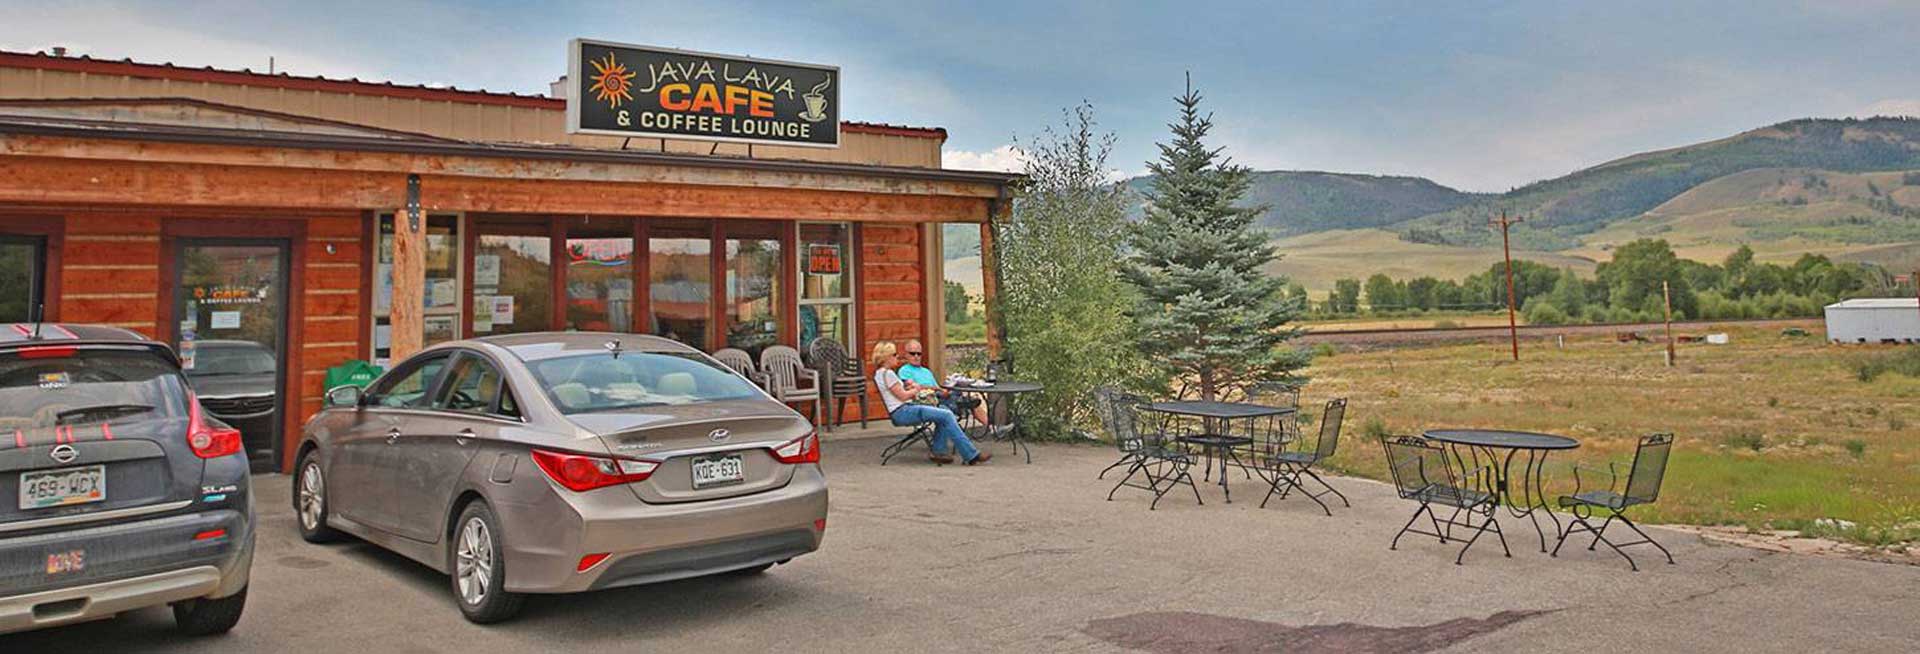 Java Lava Cafe & Coffee Lounge exterior.